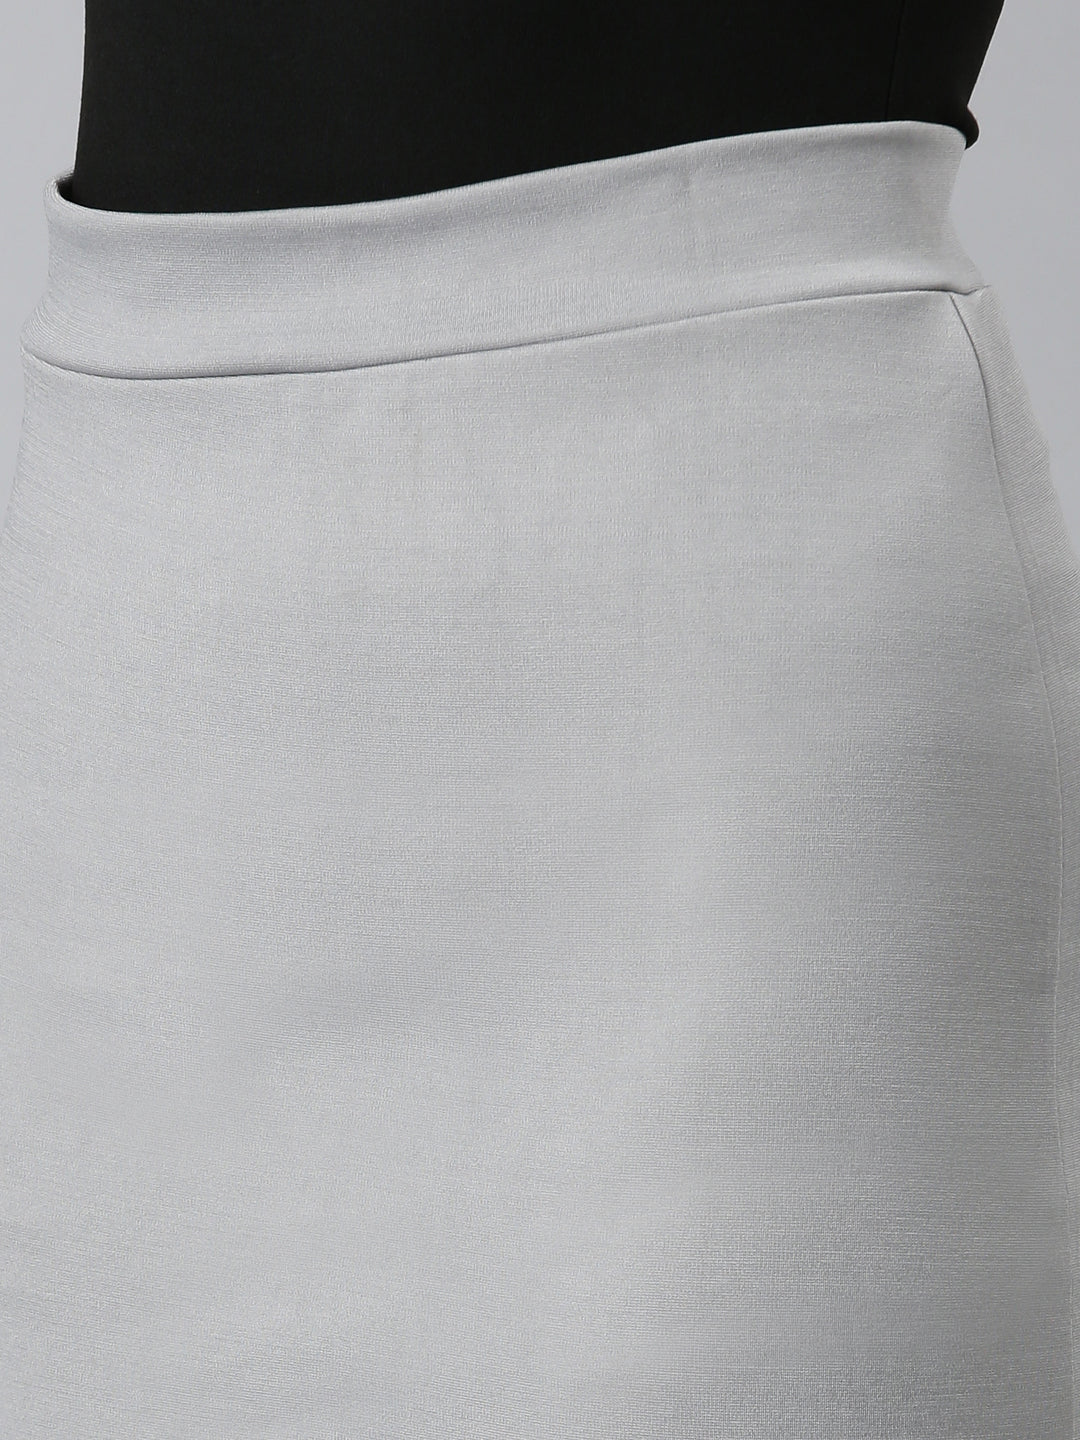 Women Grey Solid Pencil Skirt